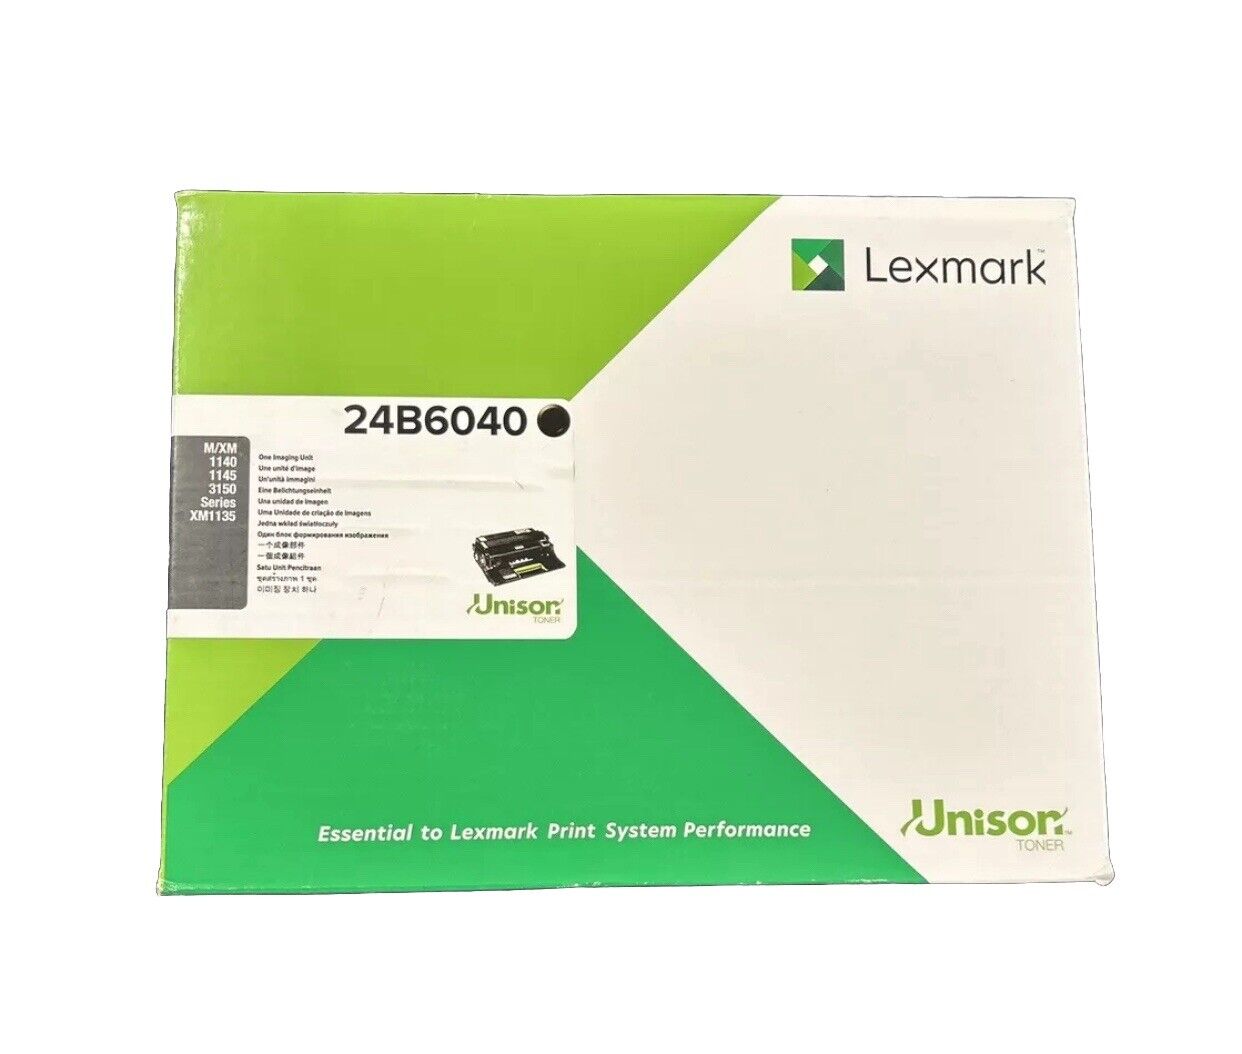 Genuine LEXMARK 24B6040 Imaging Unit, Black. NEW, Sealed Box.